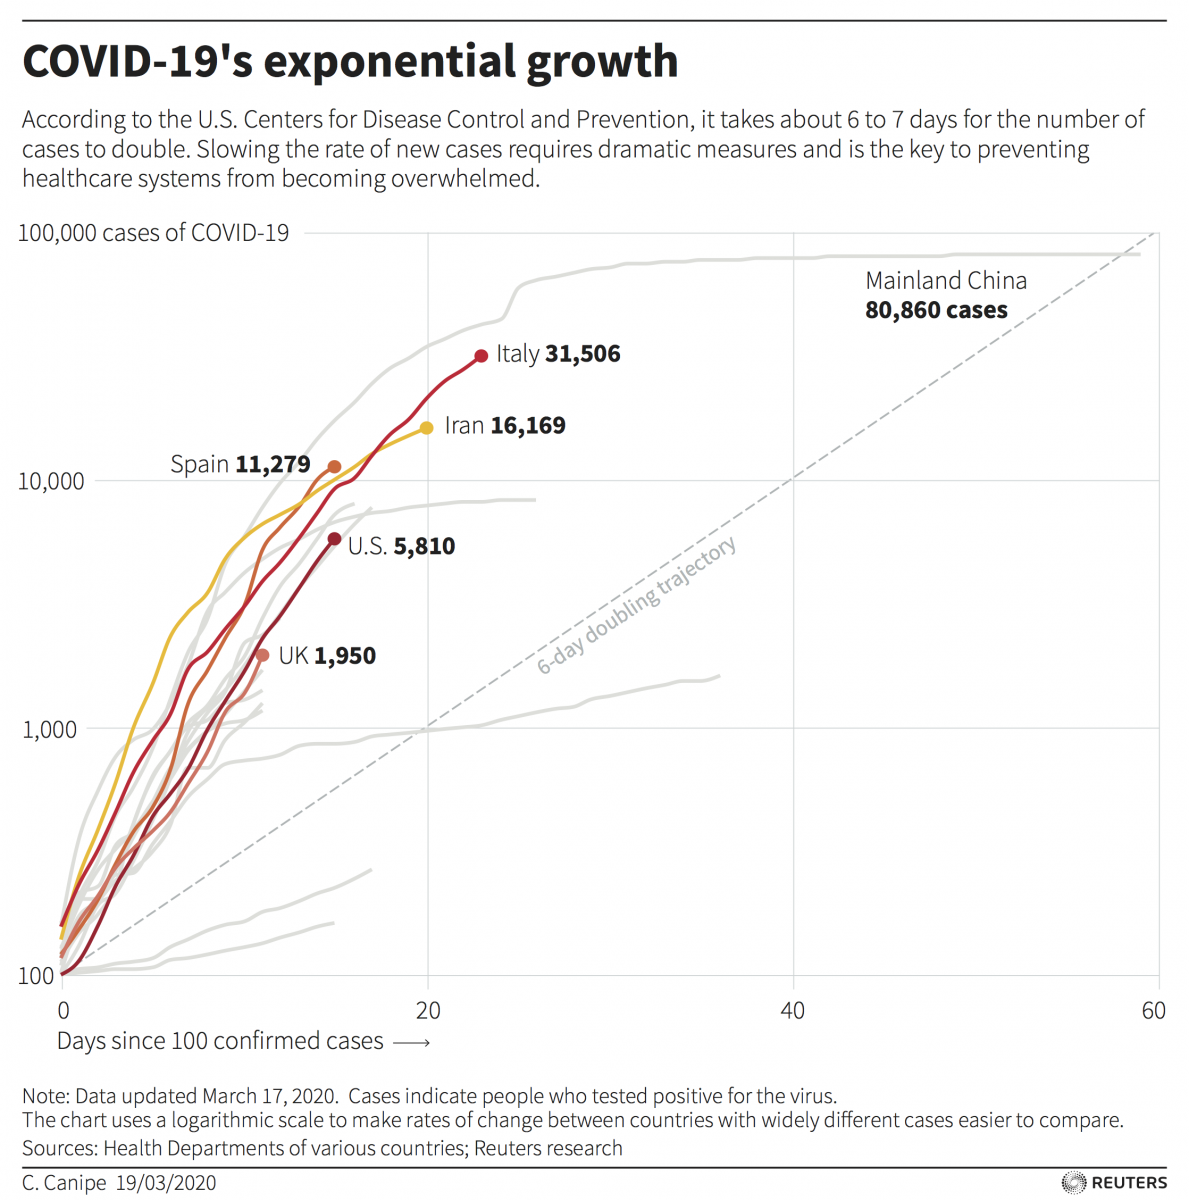 Data on COVID-19 growth